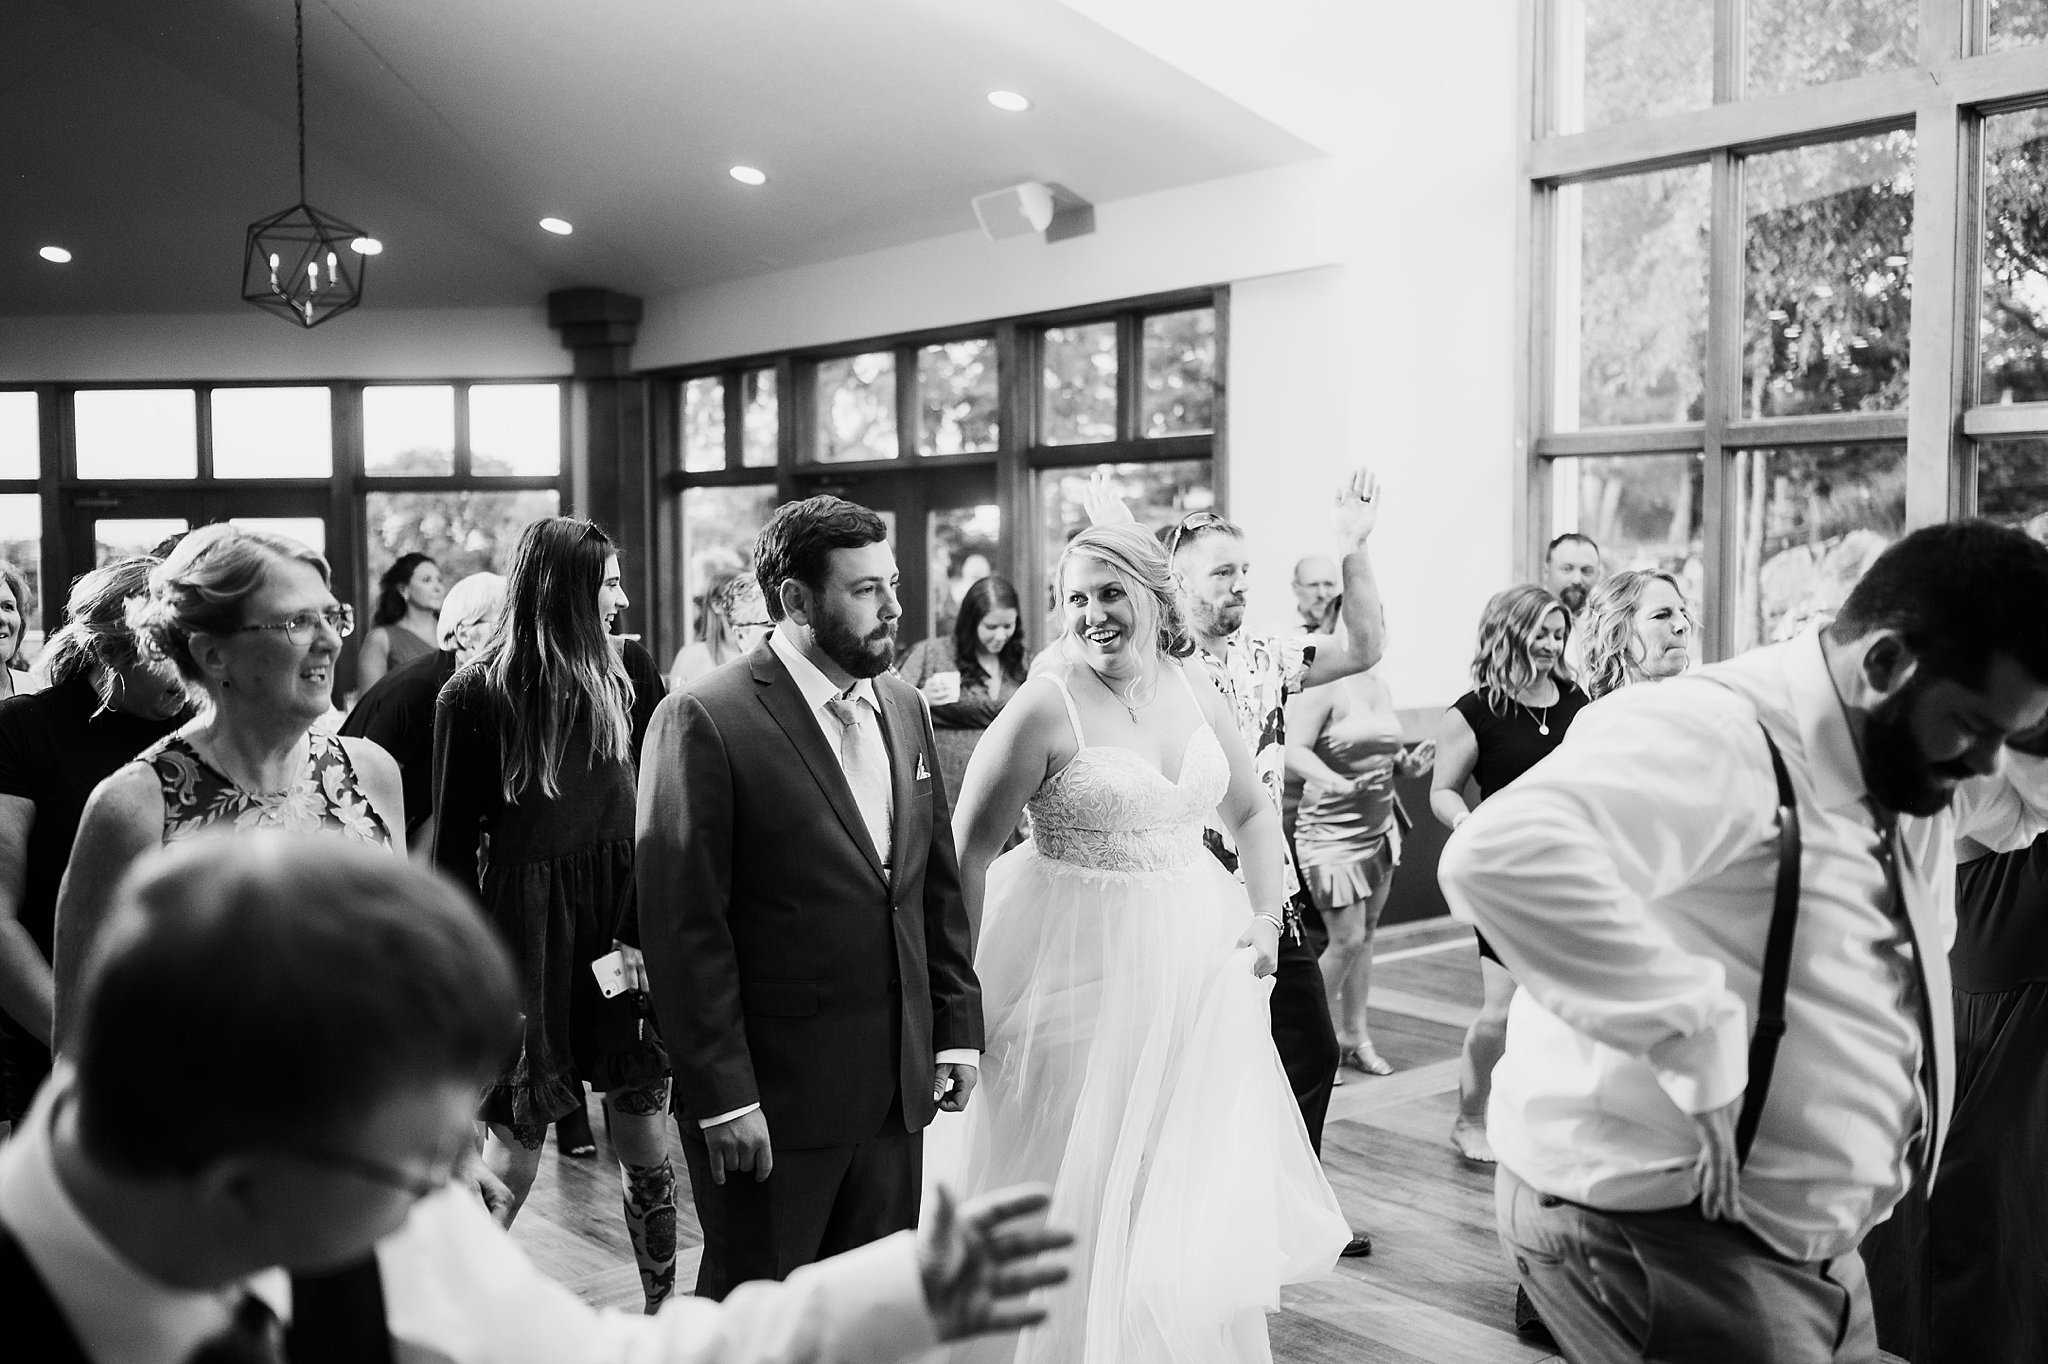 First dance to start your Minnesota wedding reception